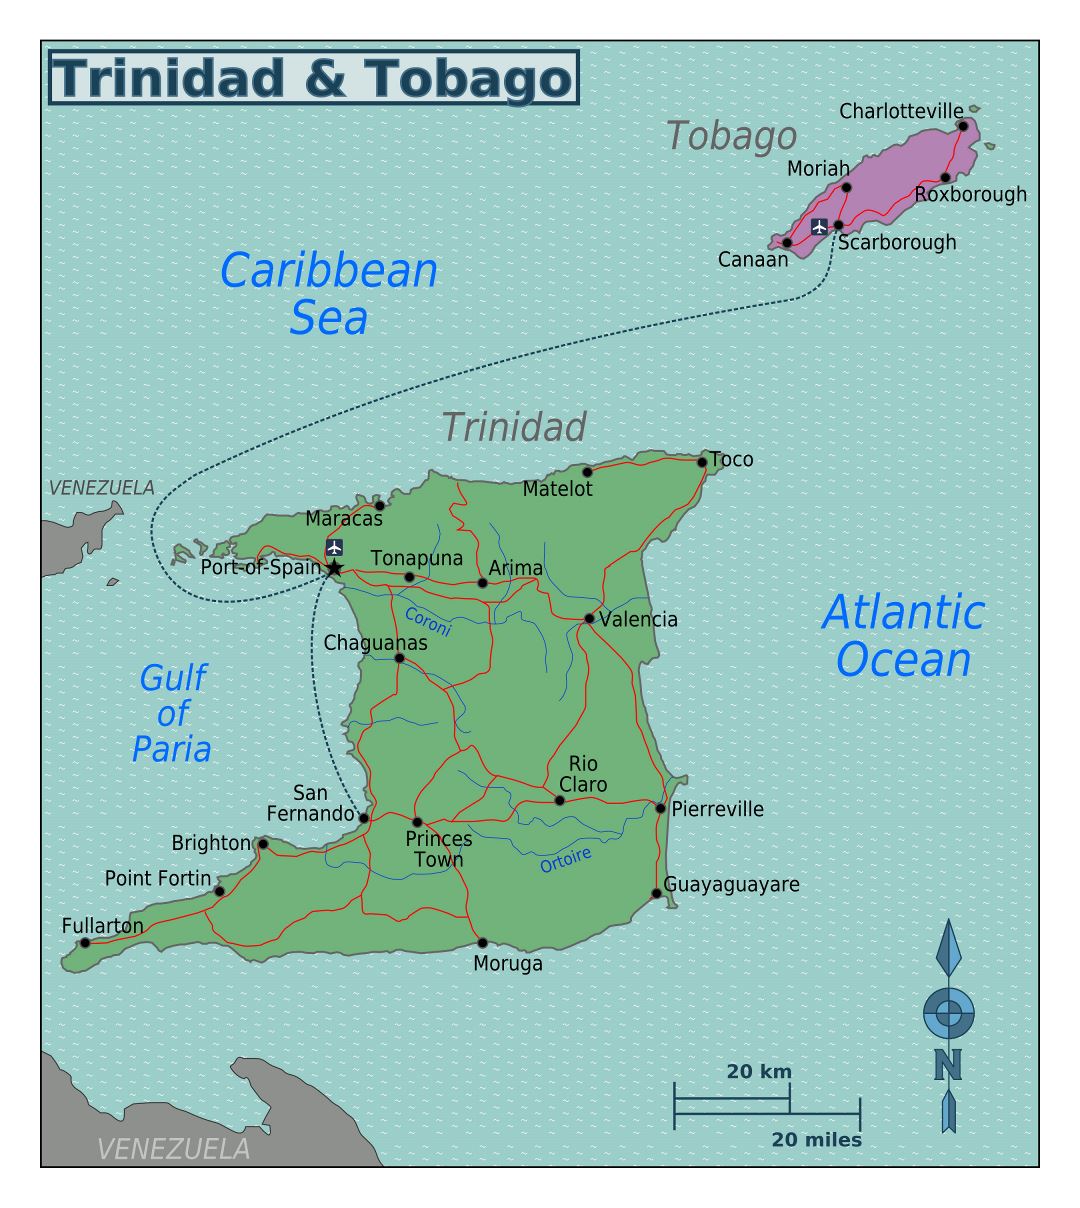 Large regions map of Trinidad and Tobago